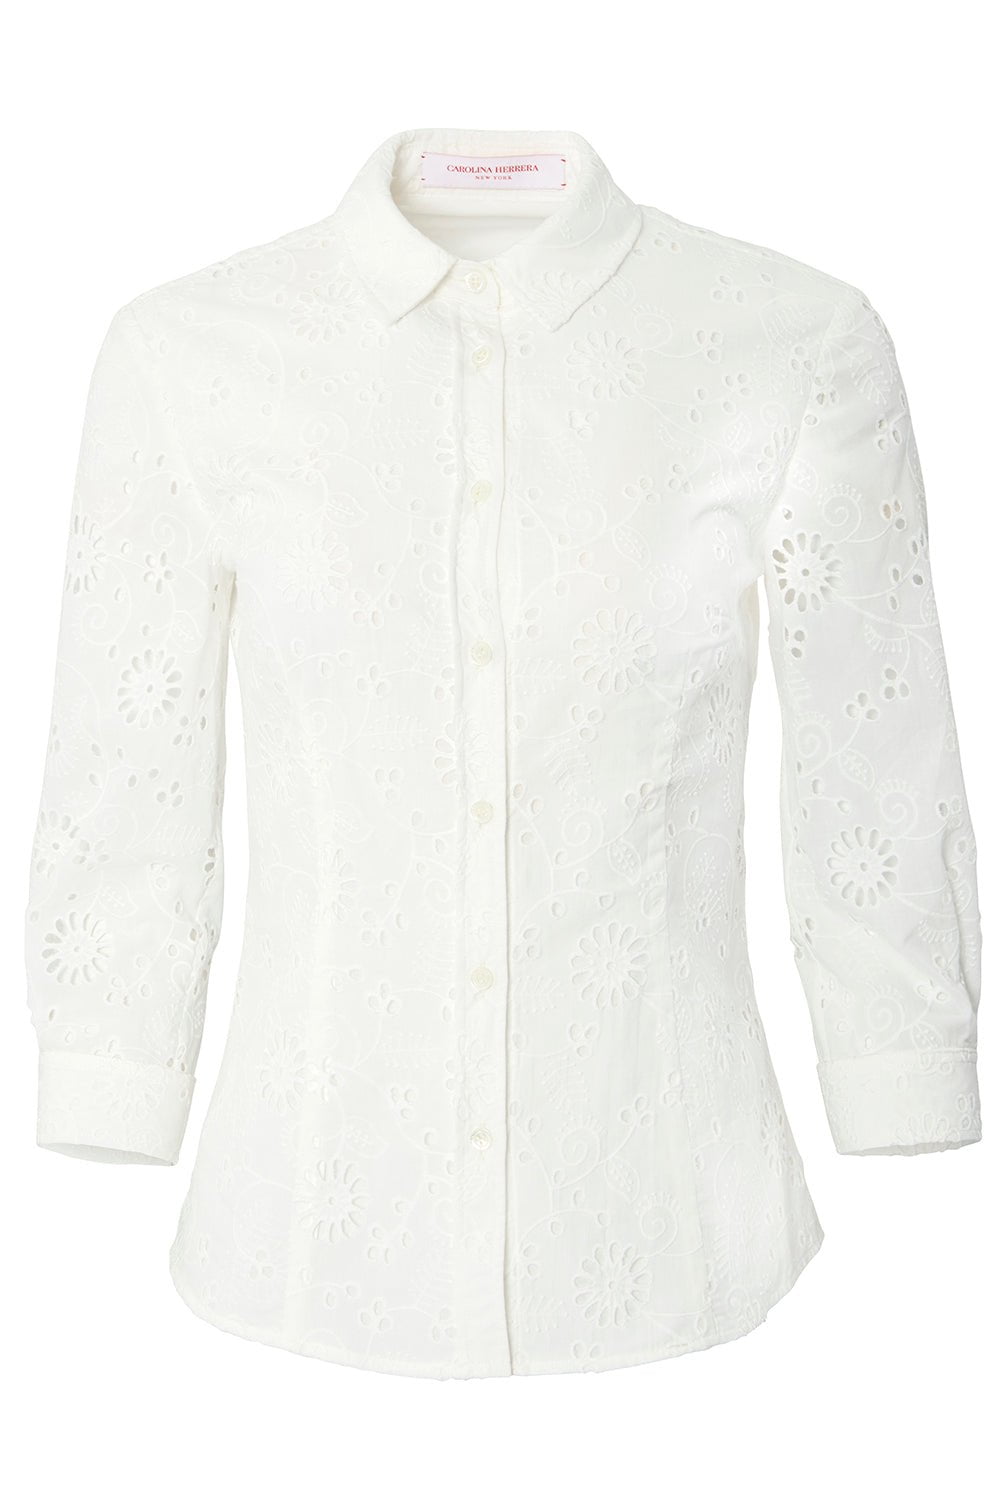 Sariah Eyelet Top - White, Fashion Nova, Shirts & Blouses